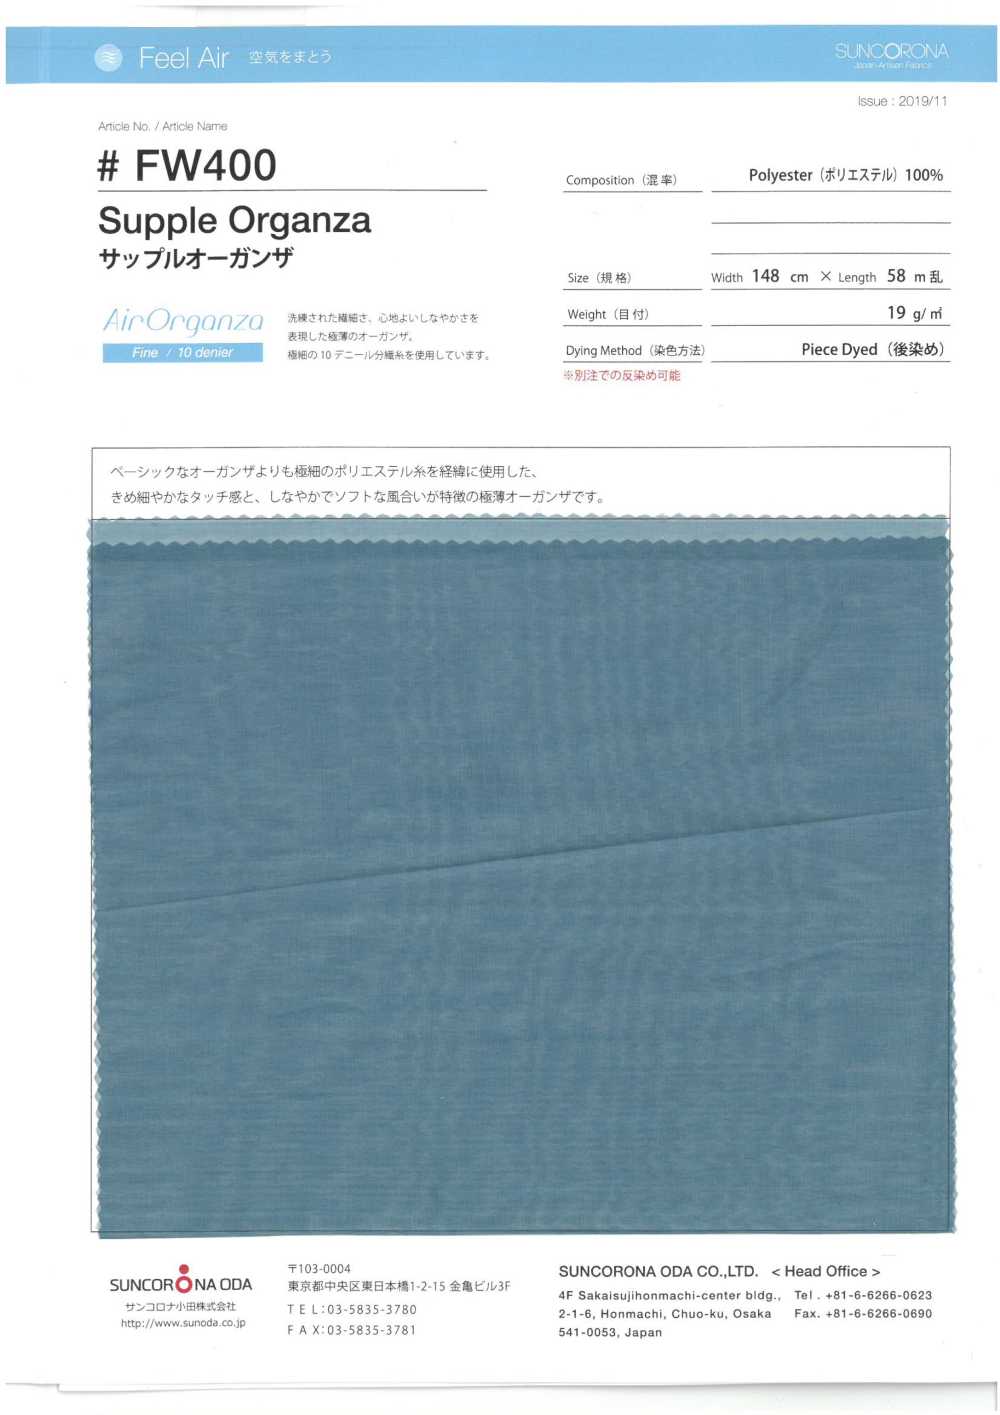 FW400 Sapple Organza[Têxtil / Tecido] Suncorona Oda